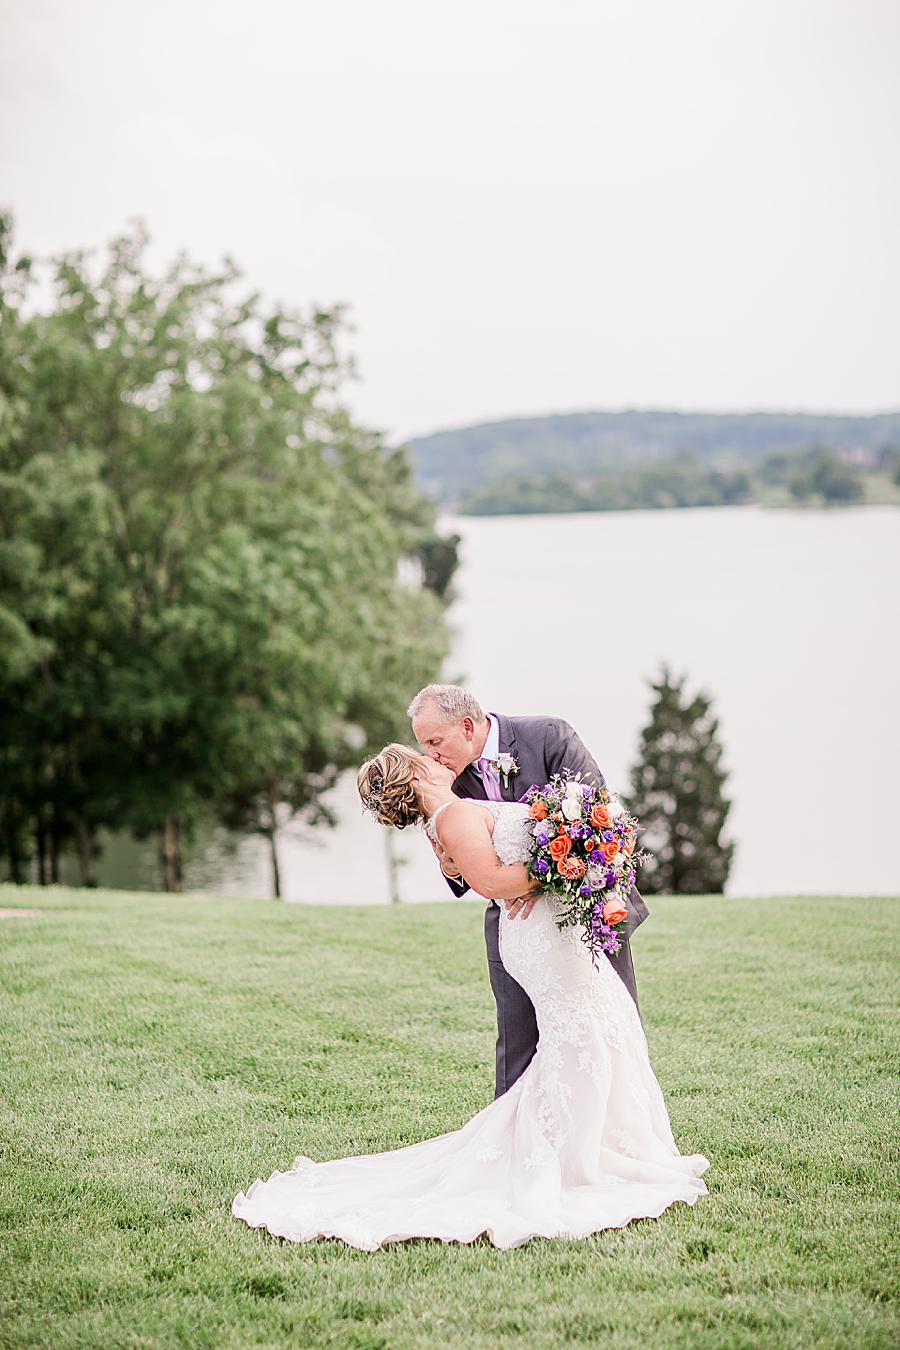 Dip kiss at this intimate WindRiver wedding by Knoxville Wedding Photographer Amanda May Photos.